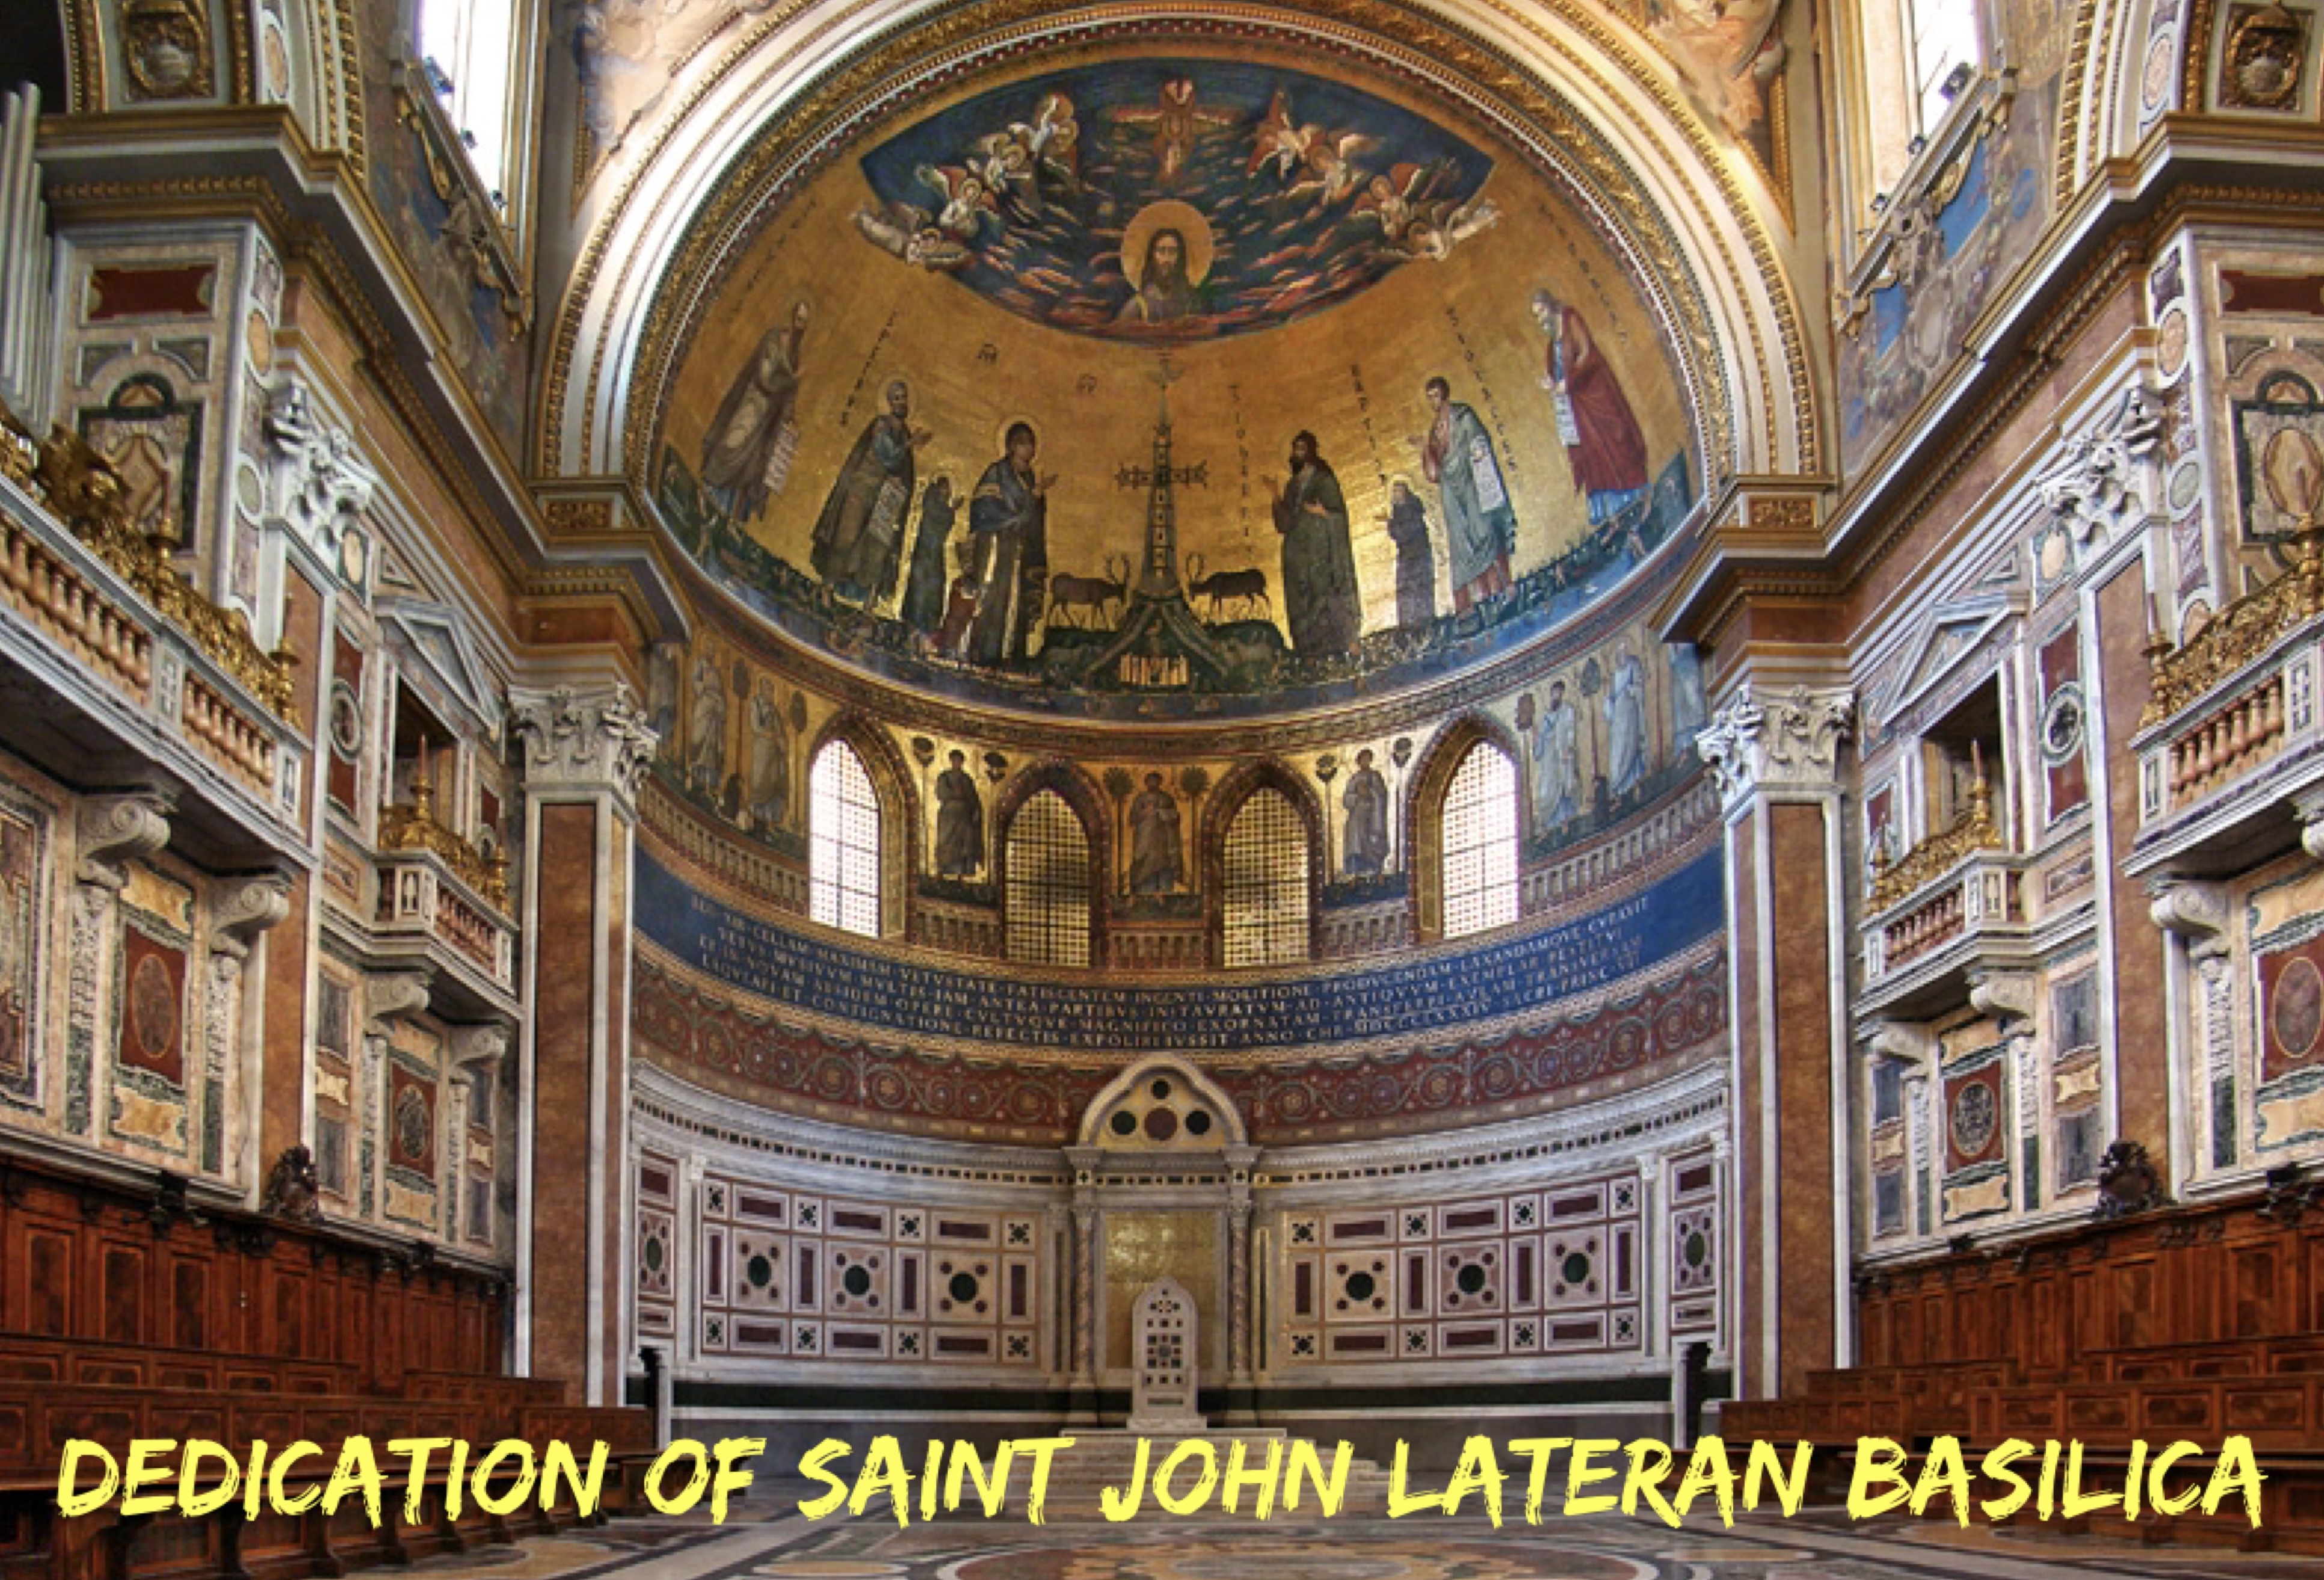 9th November - Dedication of Saint John Lateran Basilica